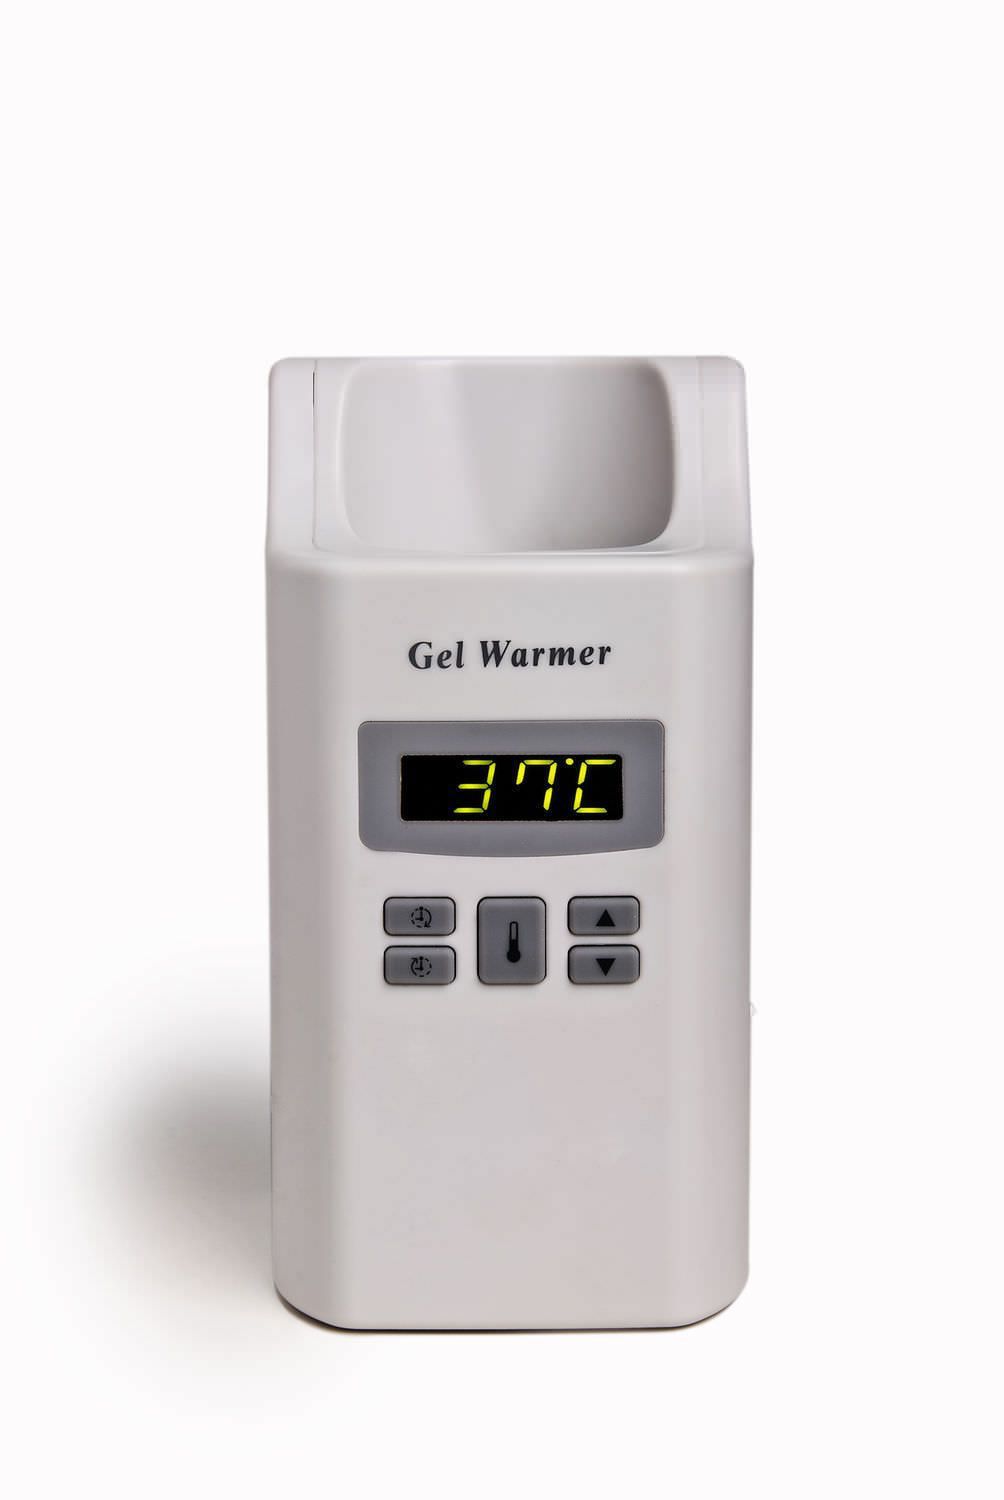 Ultrasonic gel warmer 34 - 40° C Keewell Medical Technology